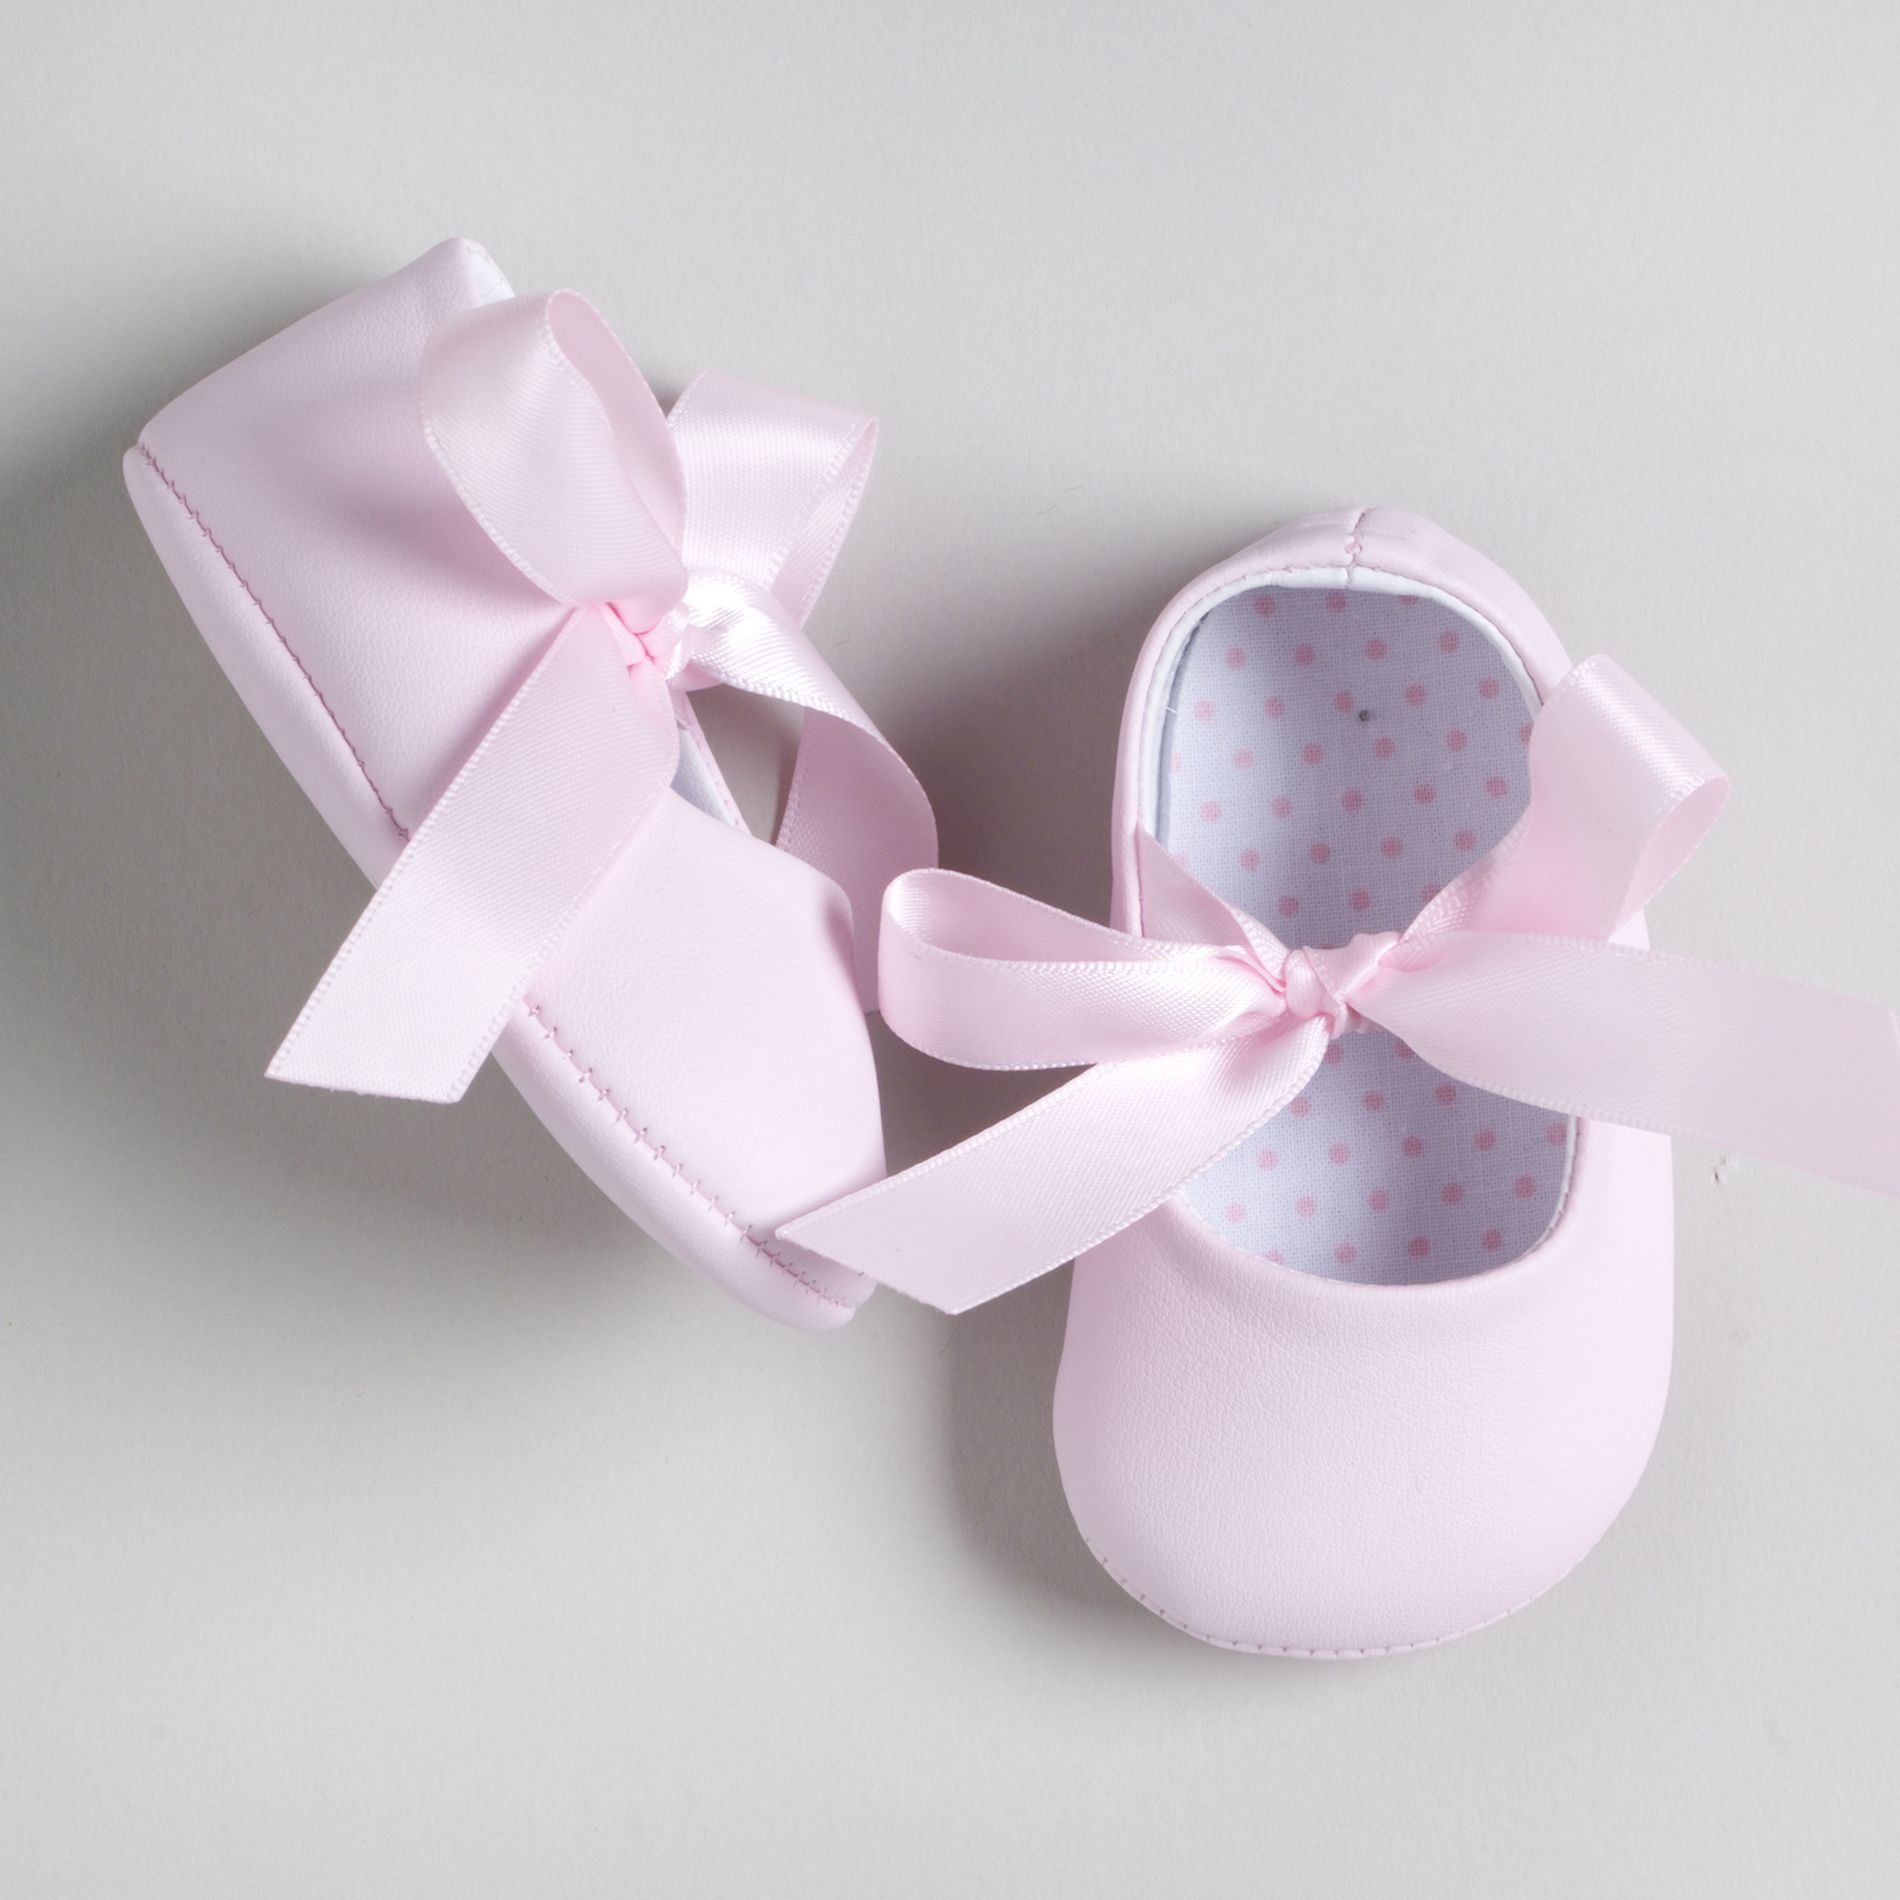 Little Wonders Girl's Vinyl Ballet Soft Sole Shoe with Ribbon Tie